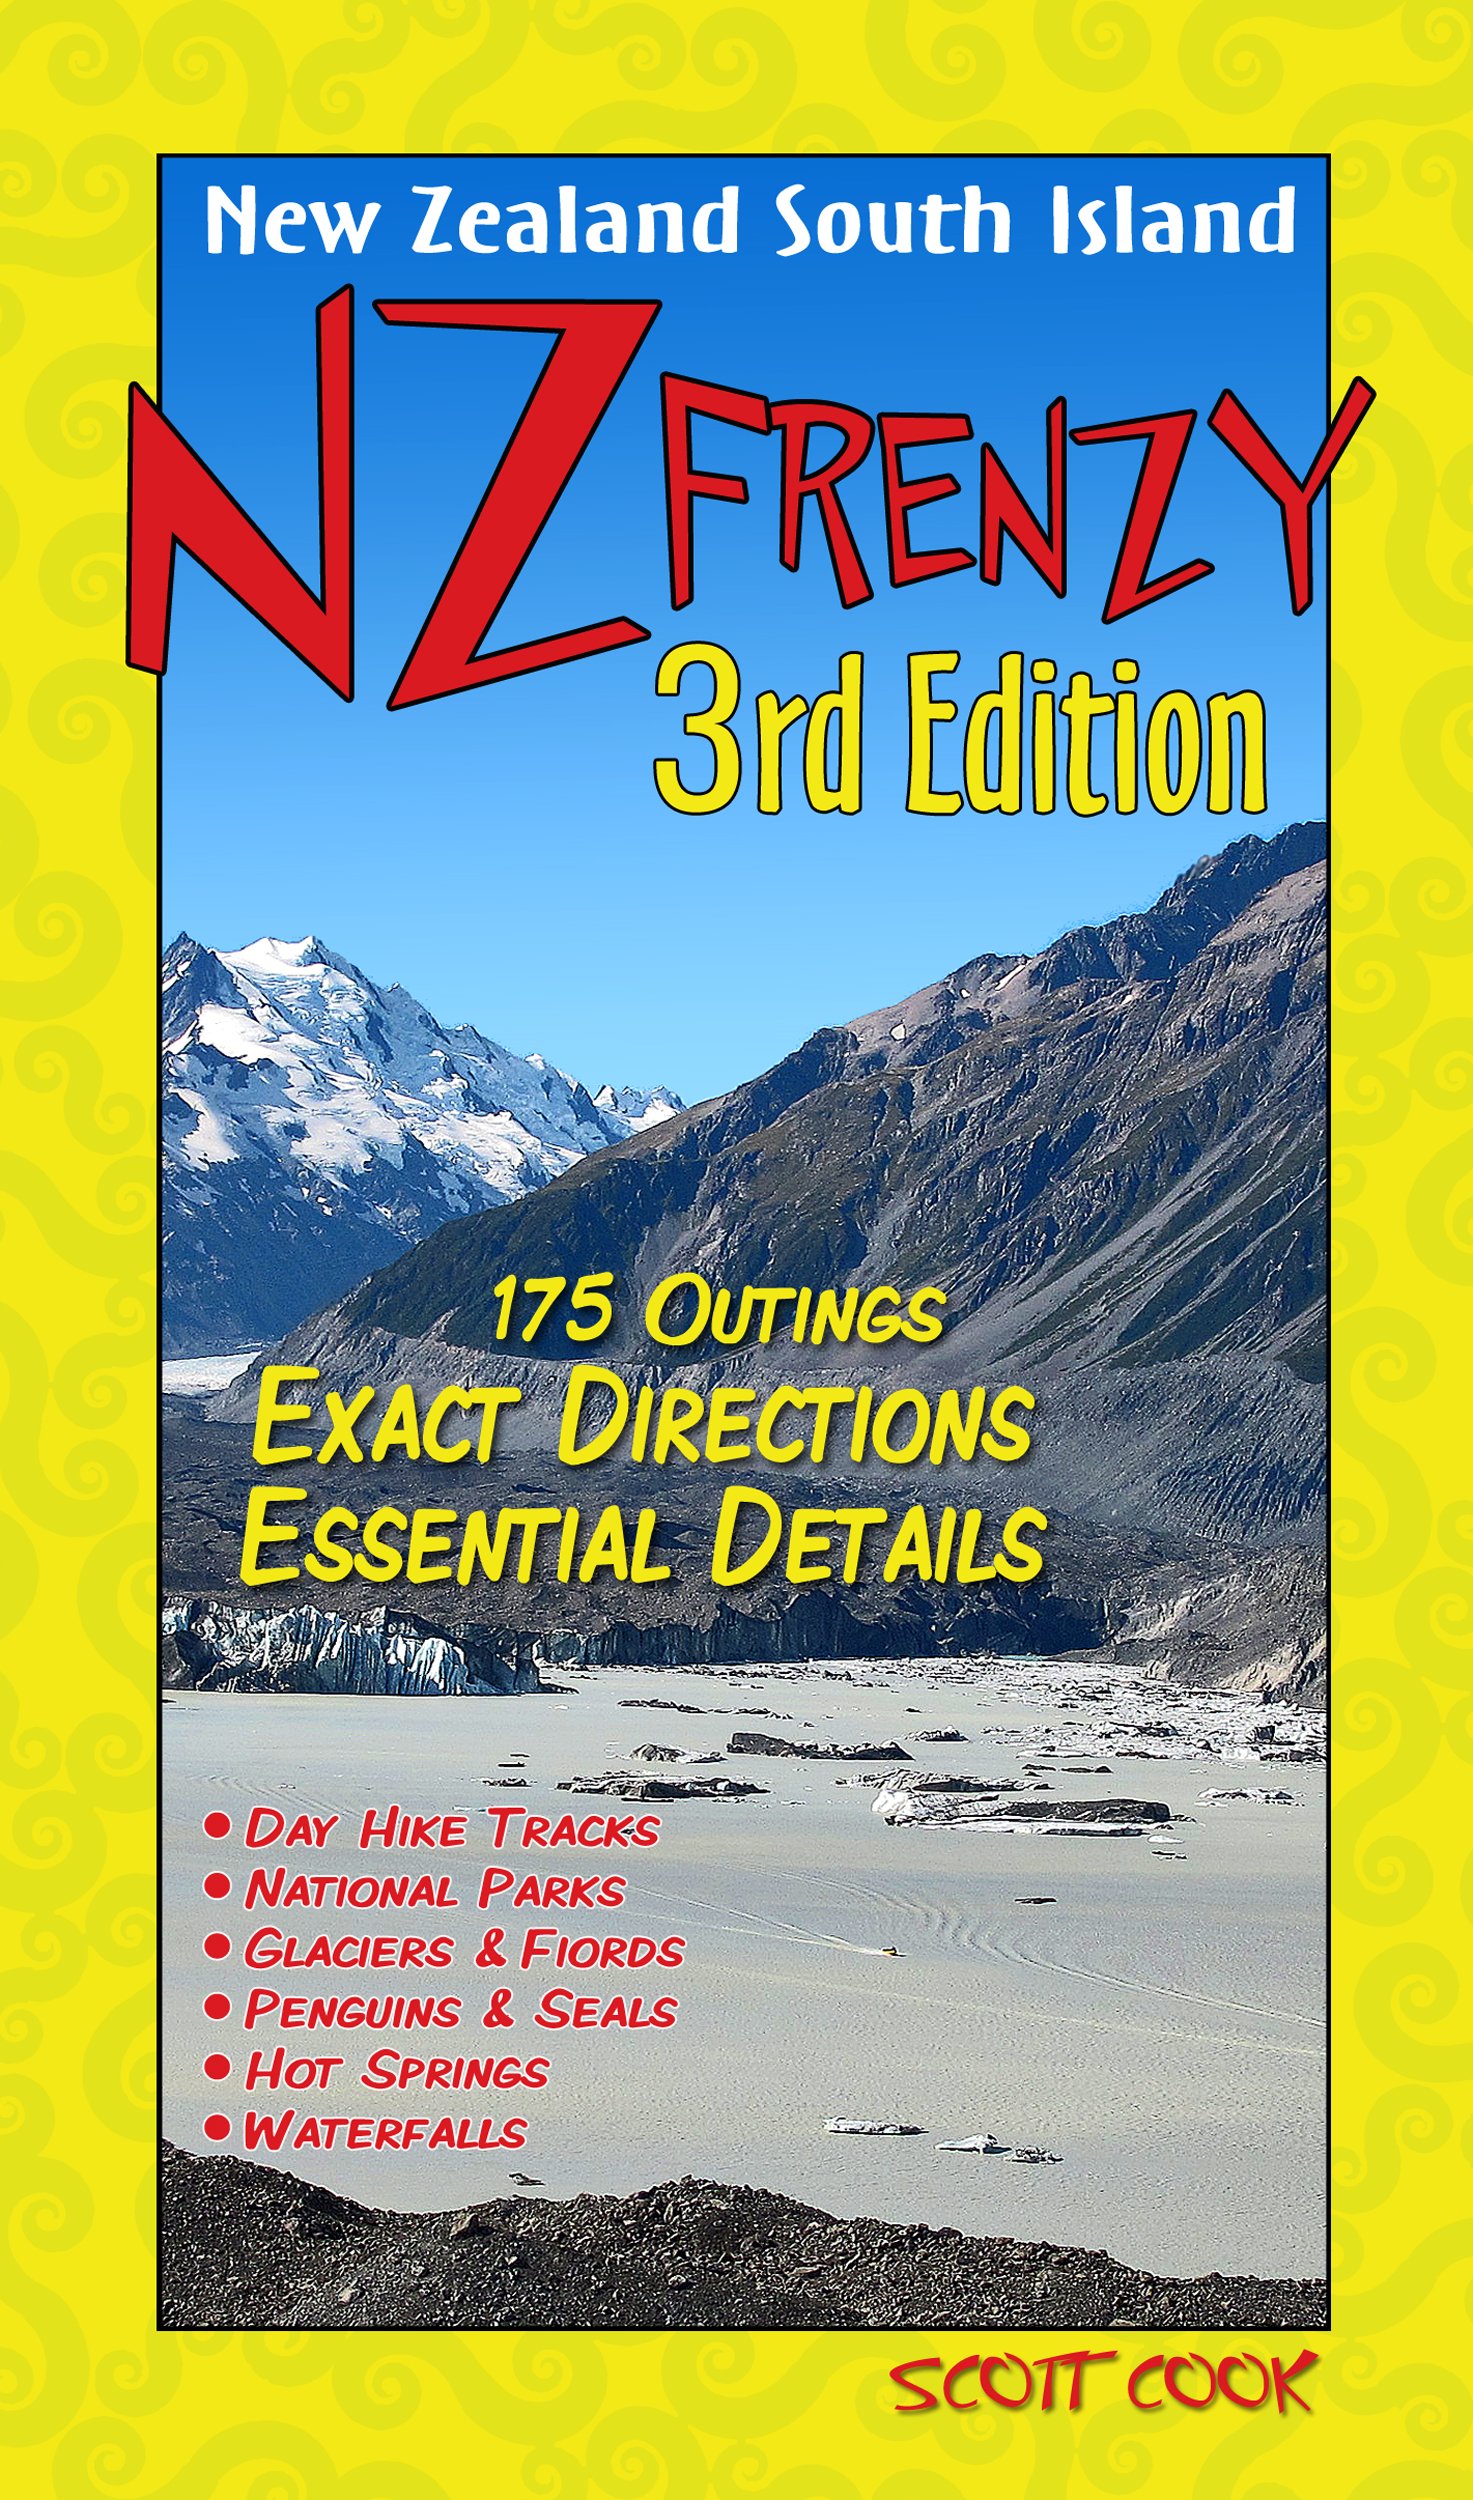 NZ Frenzy South Island New Zealand 3rd Edition